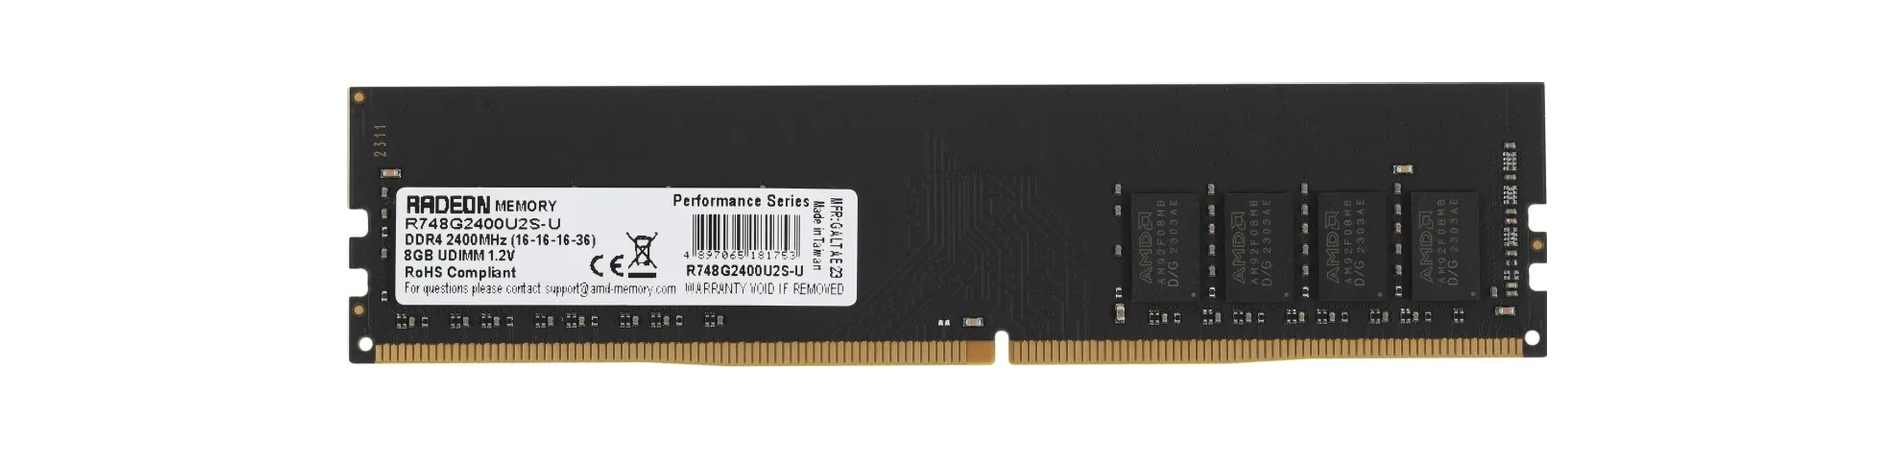 Оперативная память AMD Radeon R7 Performance Series (R748G2400U2S-U) 8 ГБ